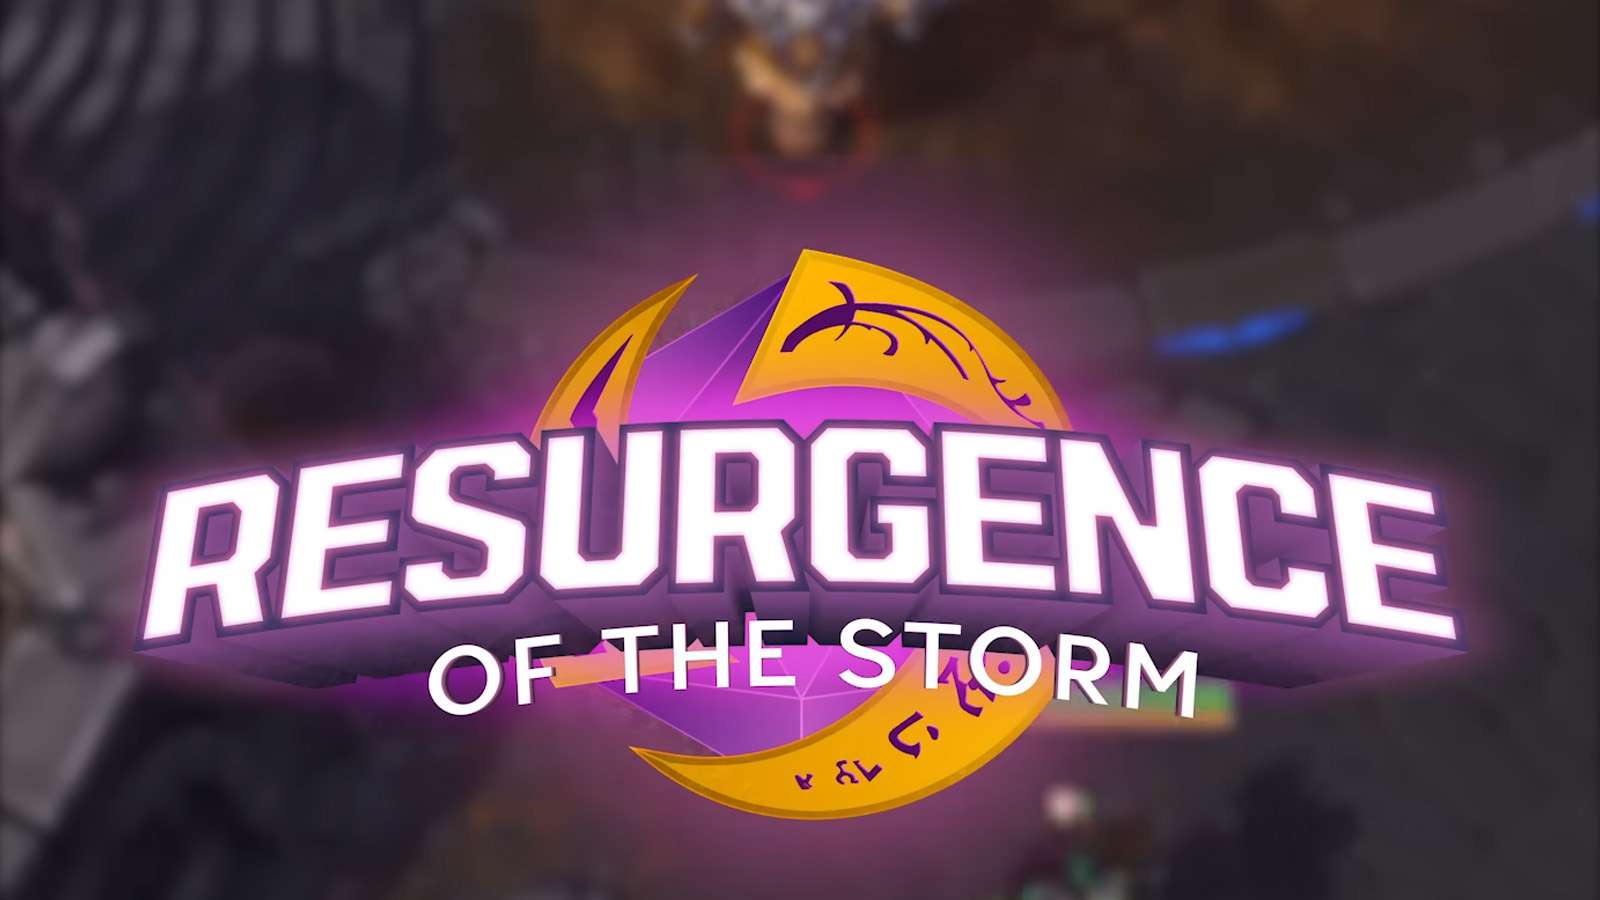 Resurgence of the Storm logo